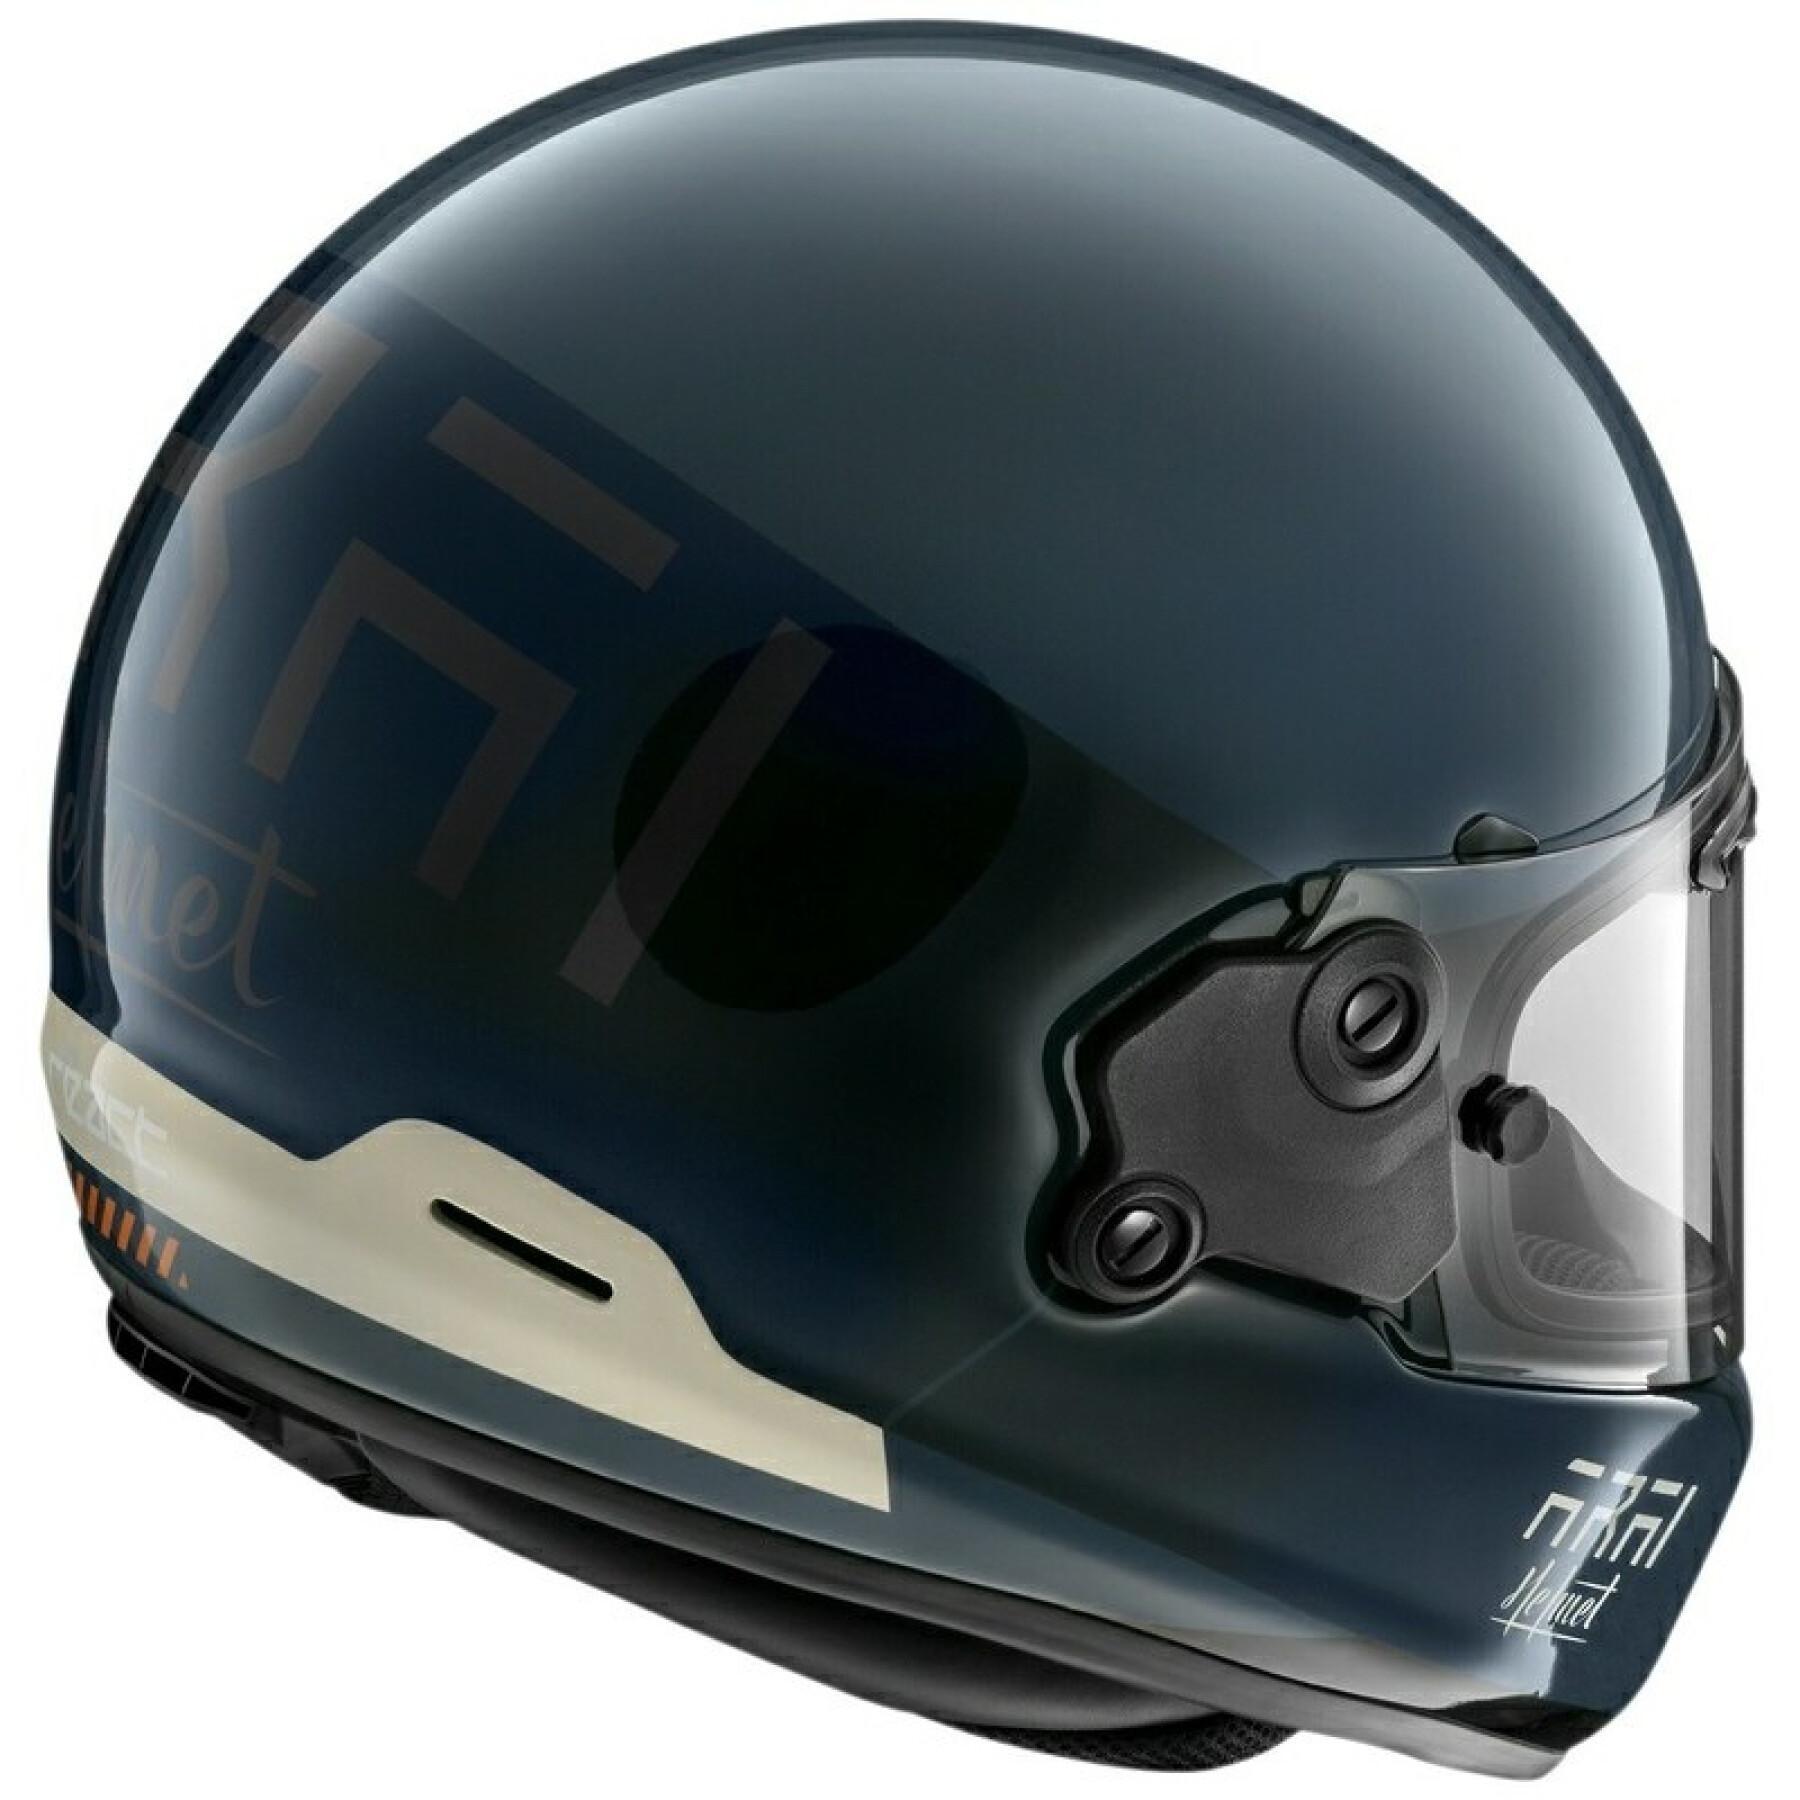 Full face motorcycle helmet Arai Concept-XE React